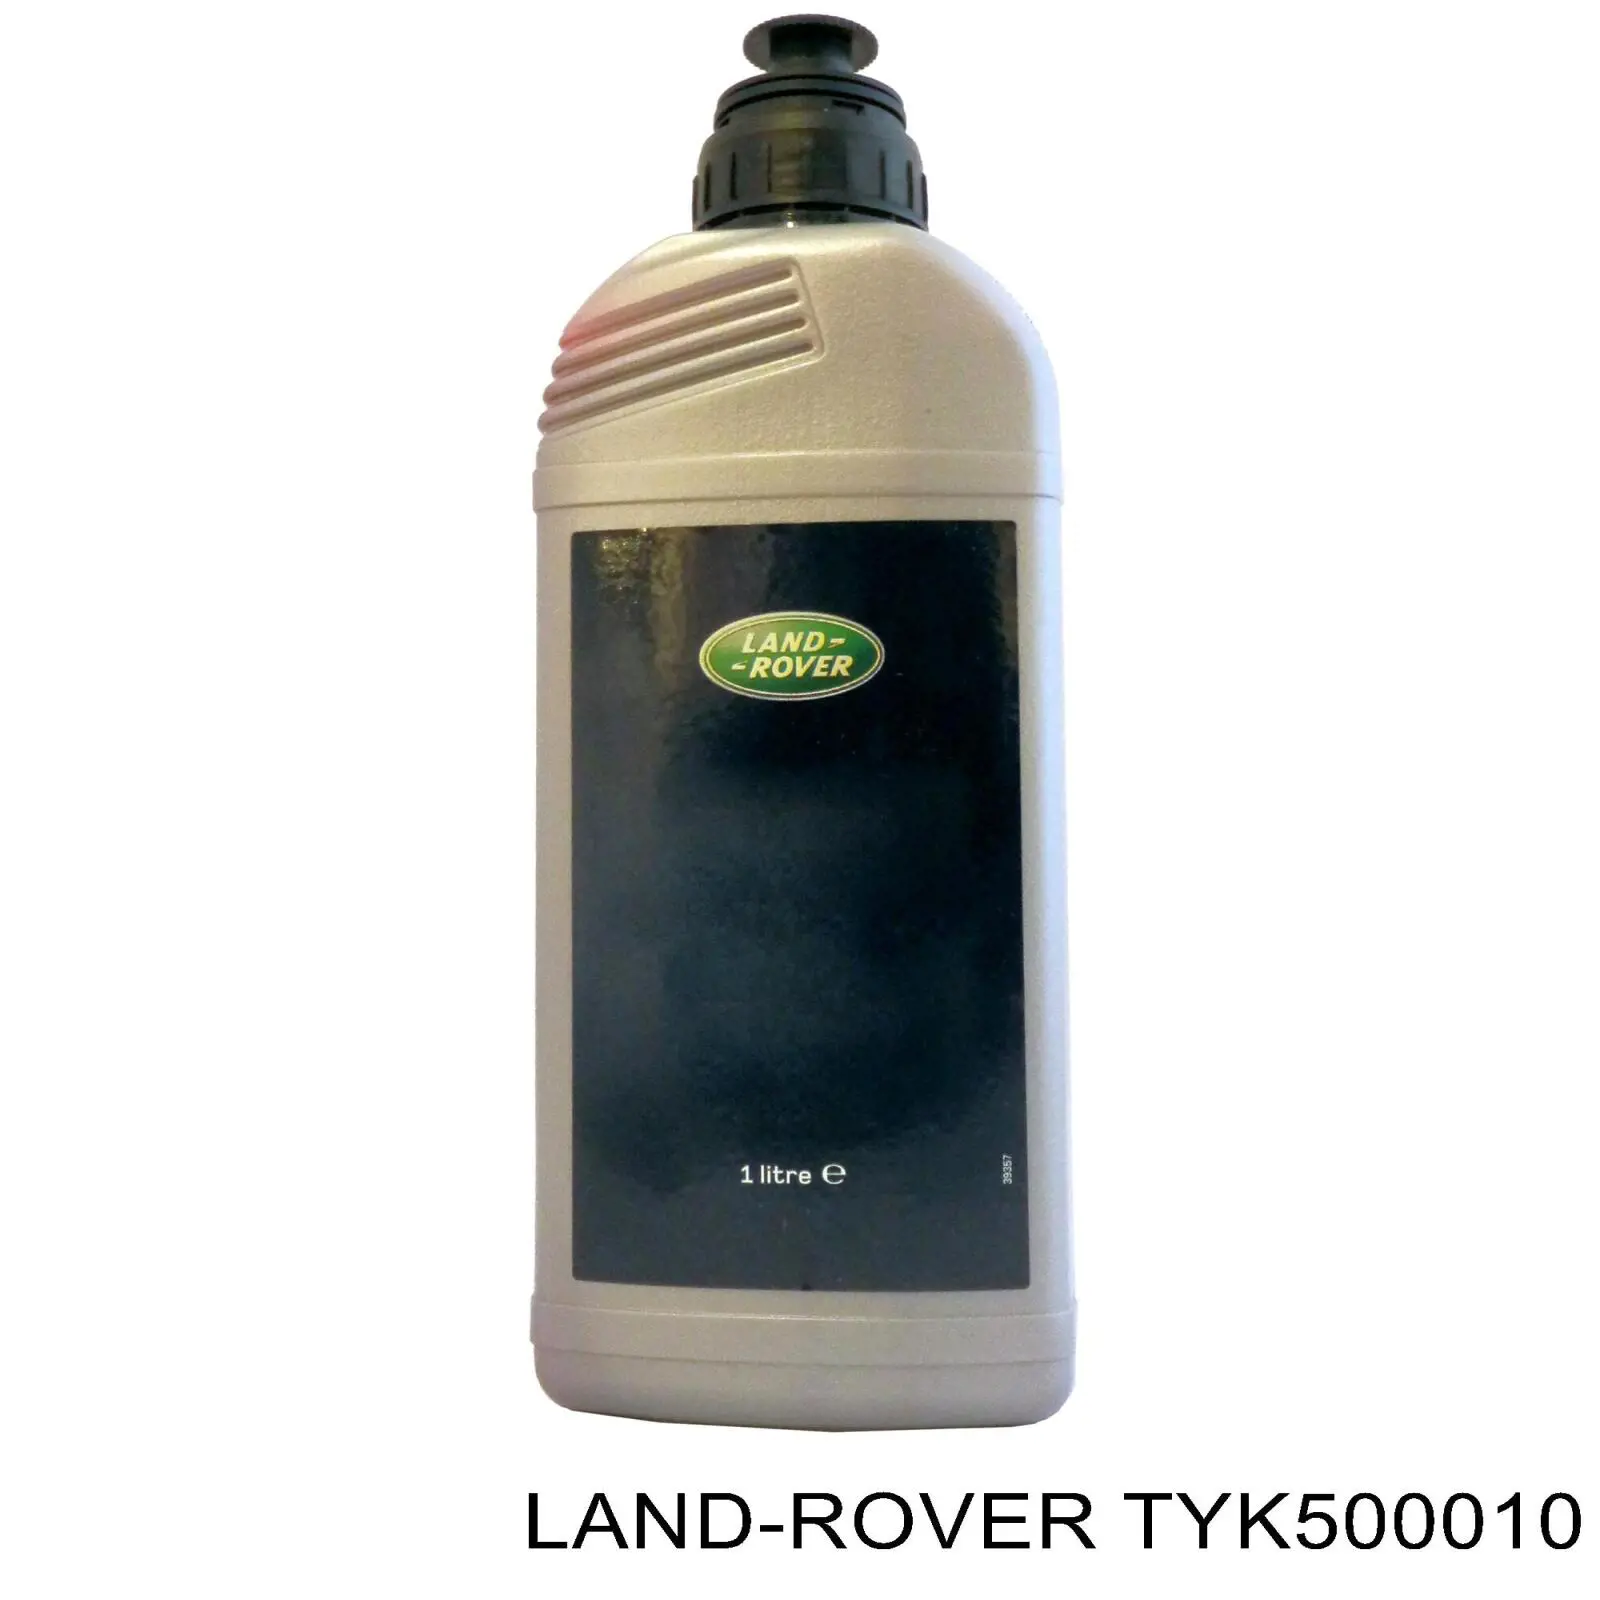  Трансмиссионное масло Land Rover (TYK500010)